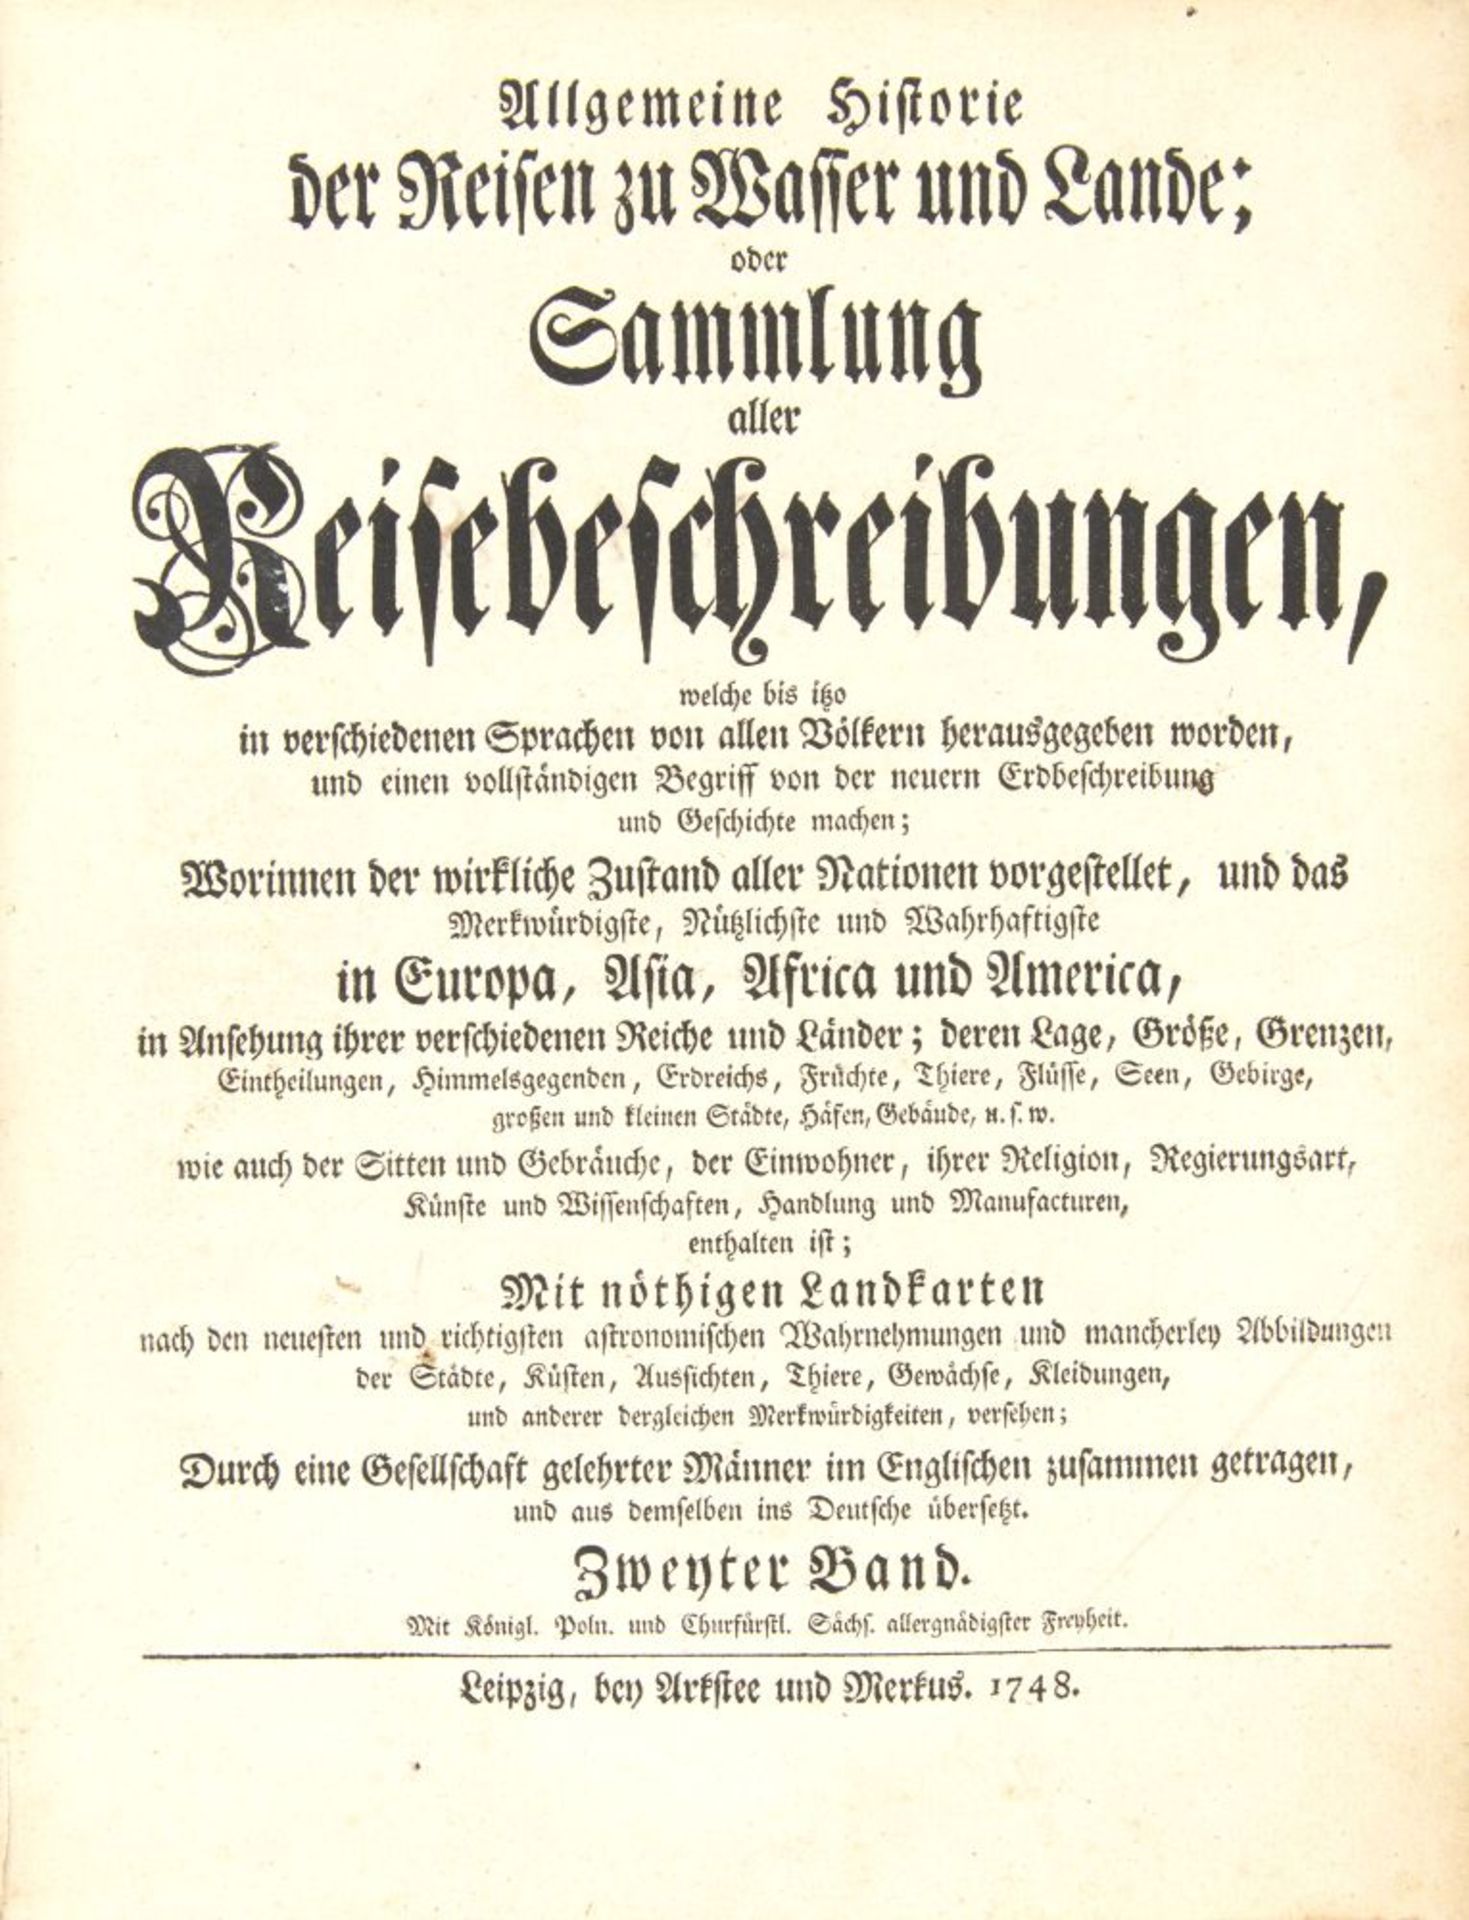 J. J. Schwabe, Reisebeschreibungen, Bd. II. Lpz 1748. - Image 2 of 4